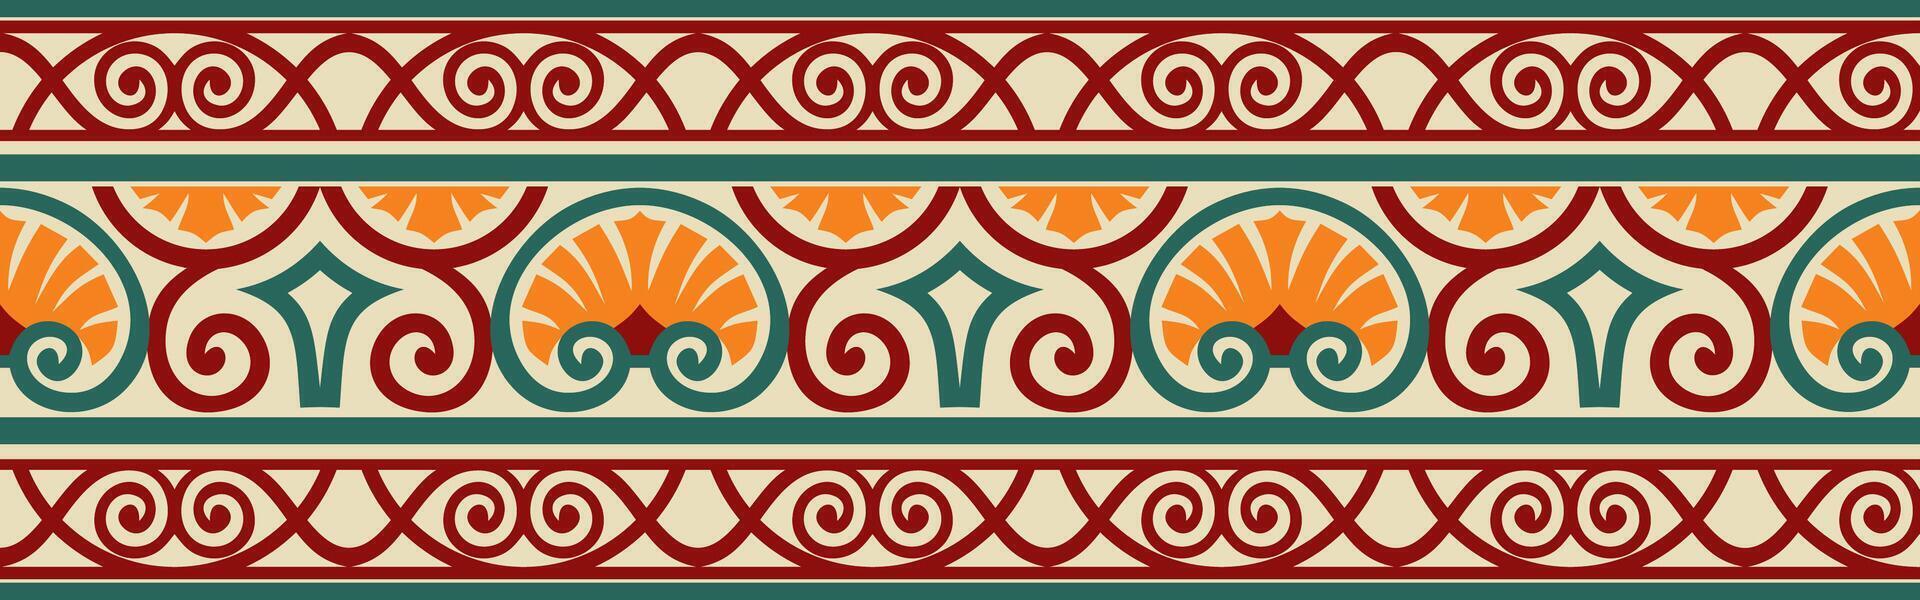 Vektor farbig nahtlos klassisch Renaissance Ornament. endlos europäisch Grenze, Wiederbelebung Stil Rahmen